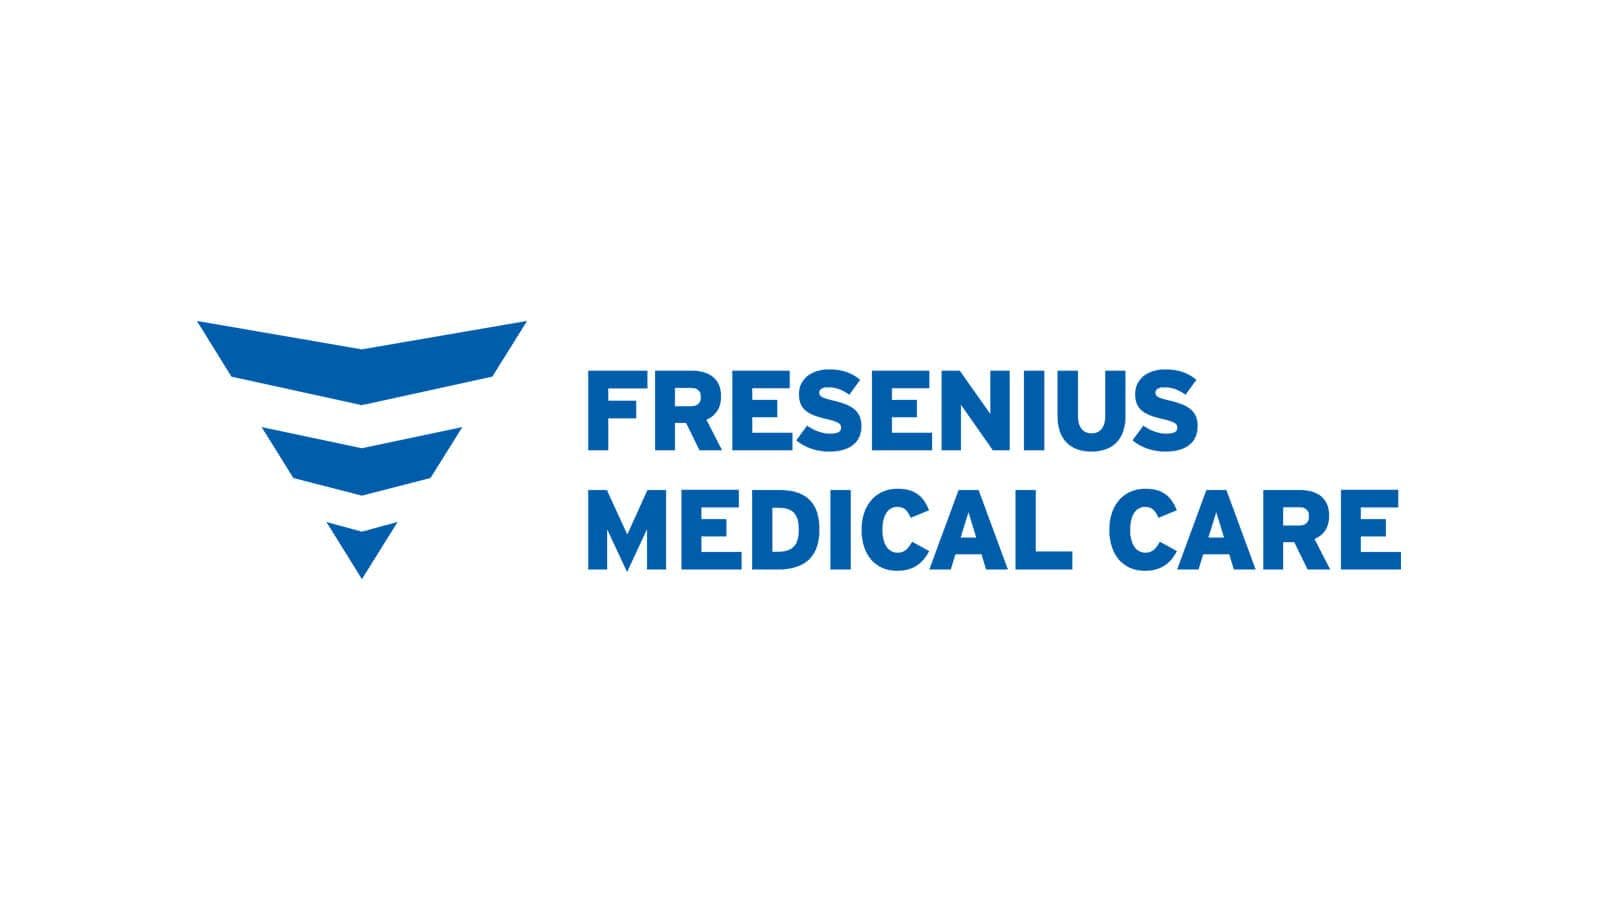 Fresenius Medial Care logo